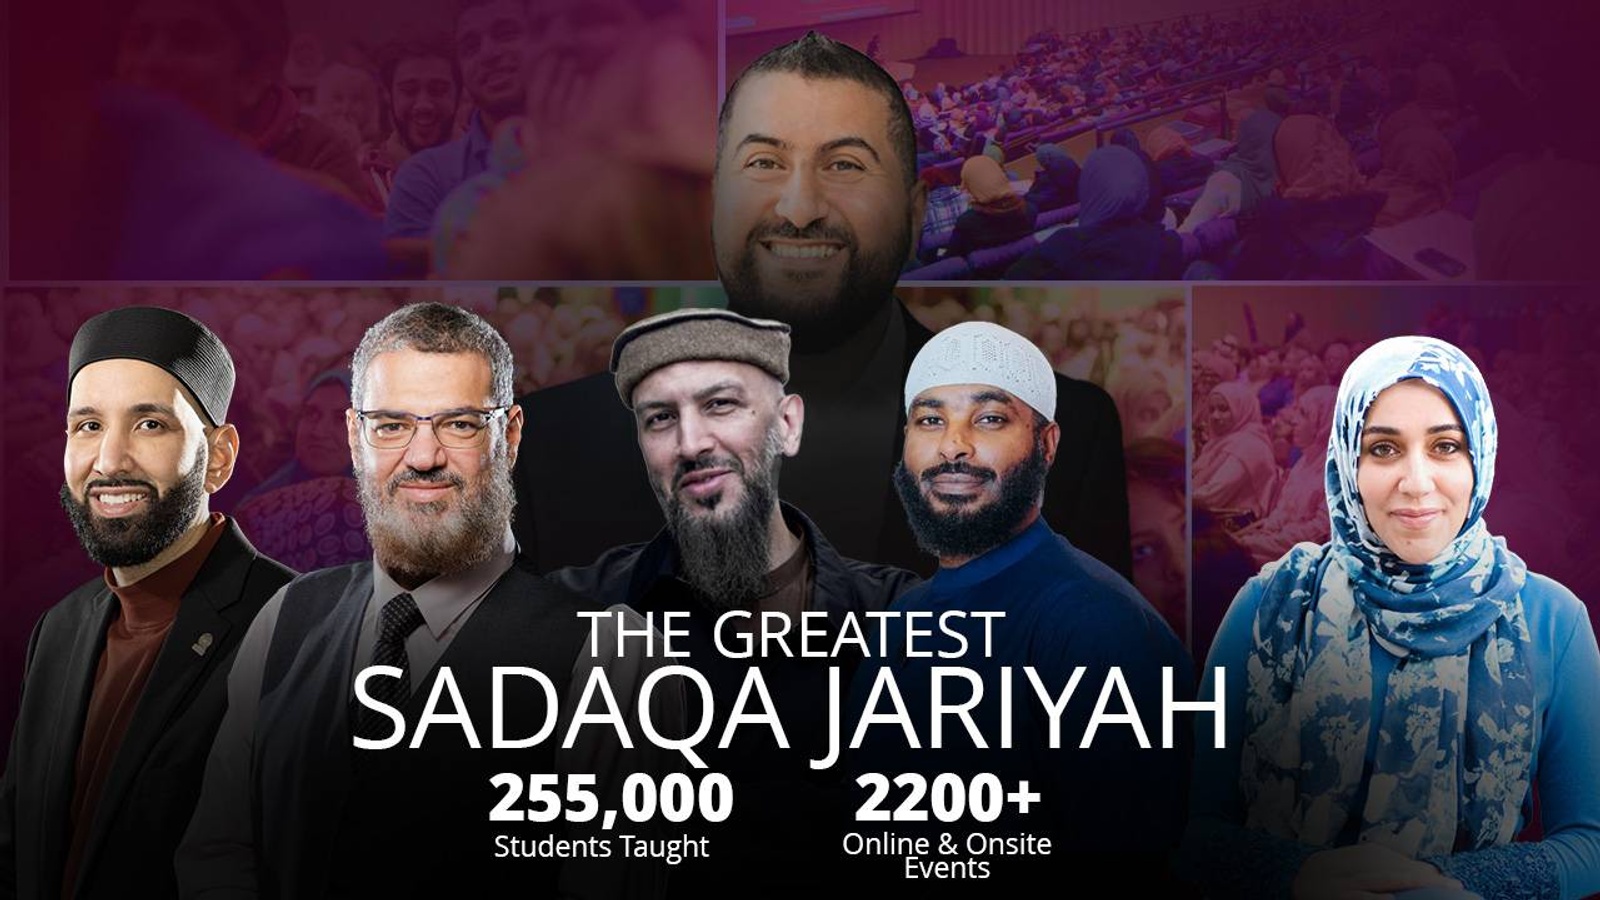 The Greatest Sadaqa Jariyah